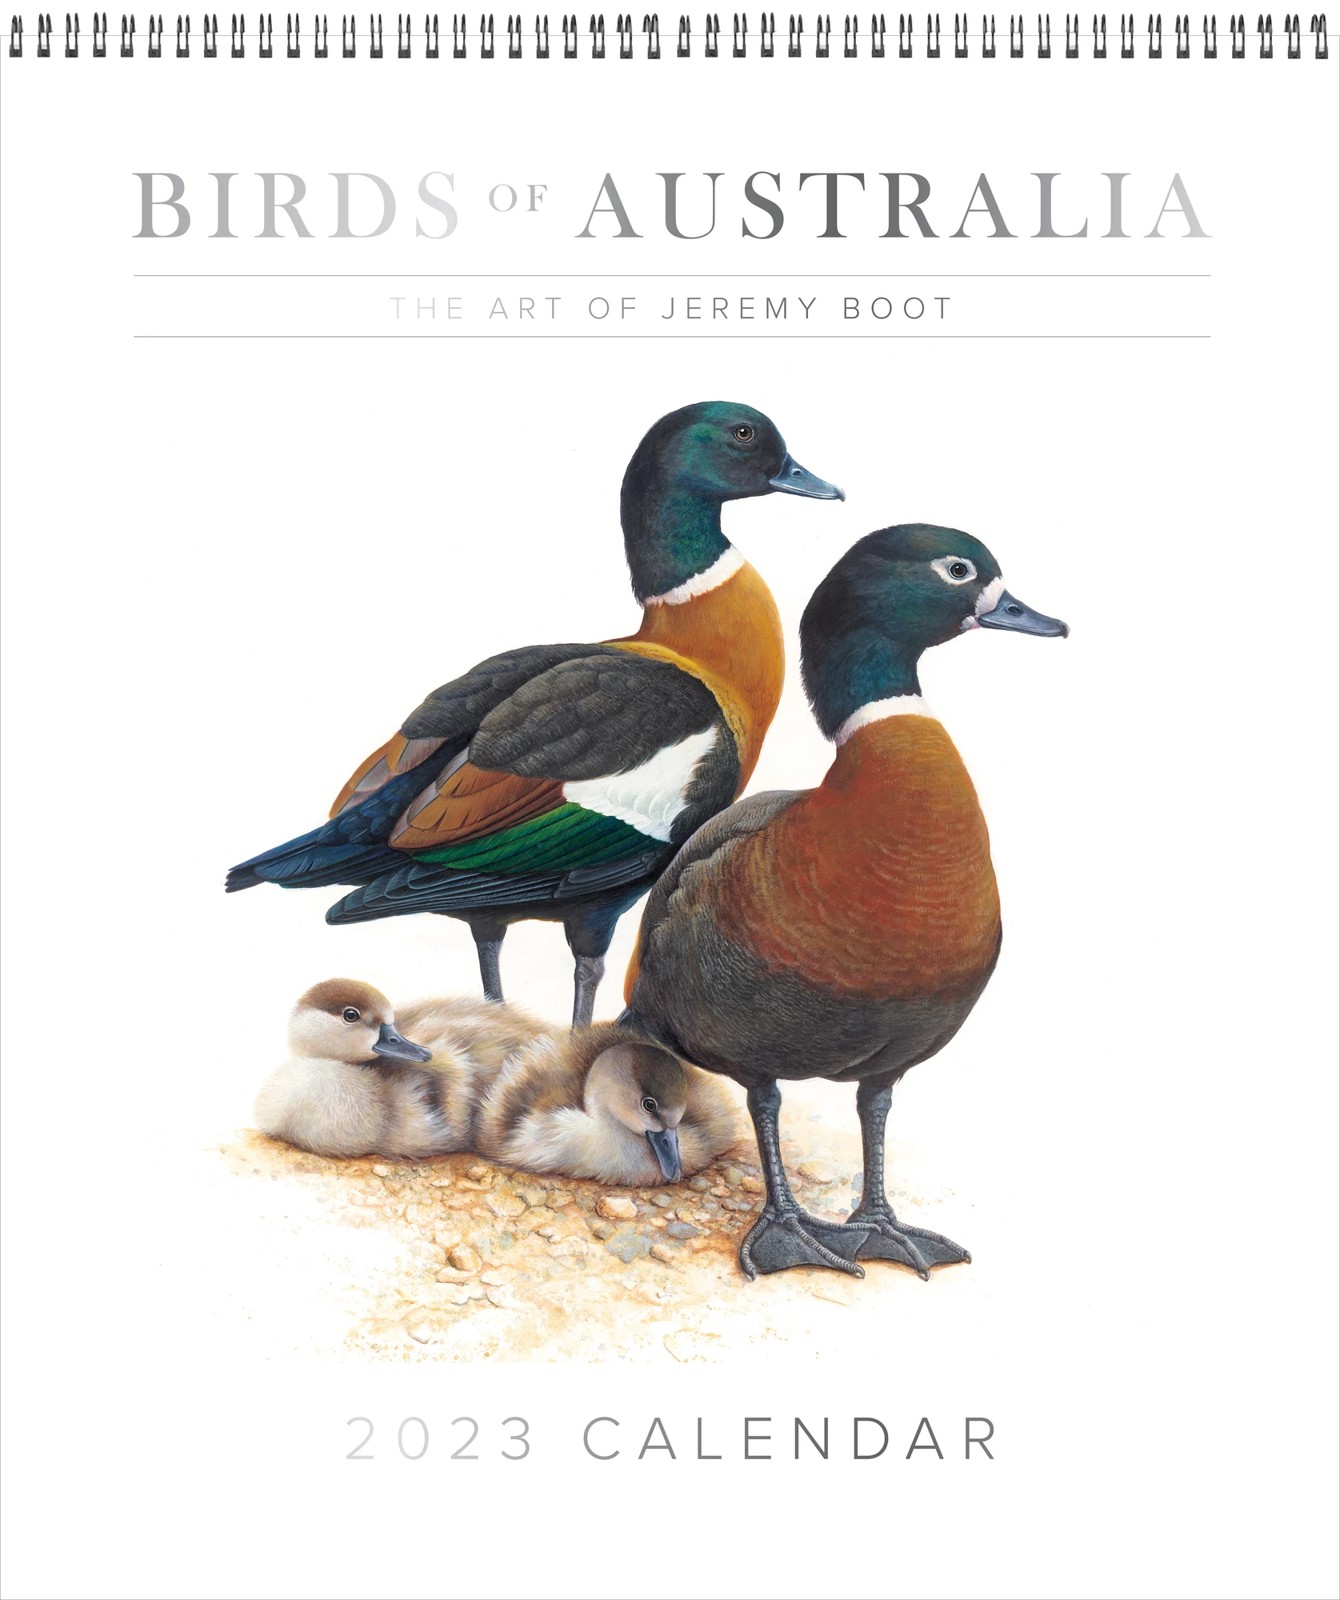 Boot Calendar -  Australia